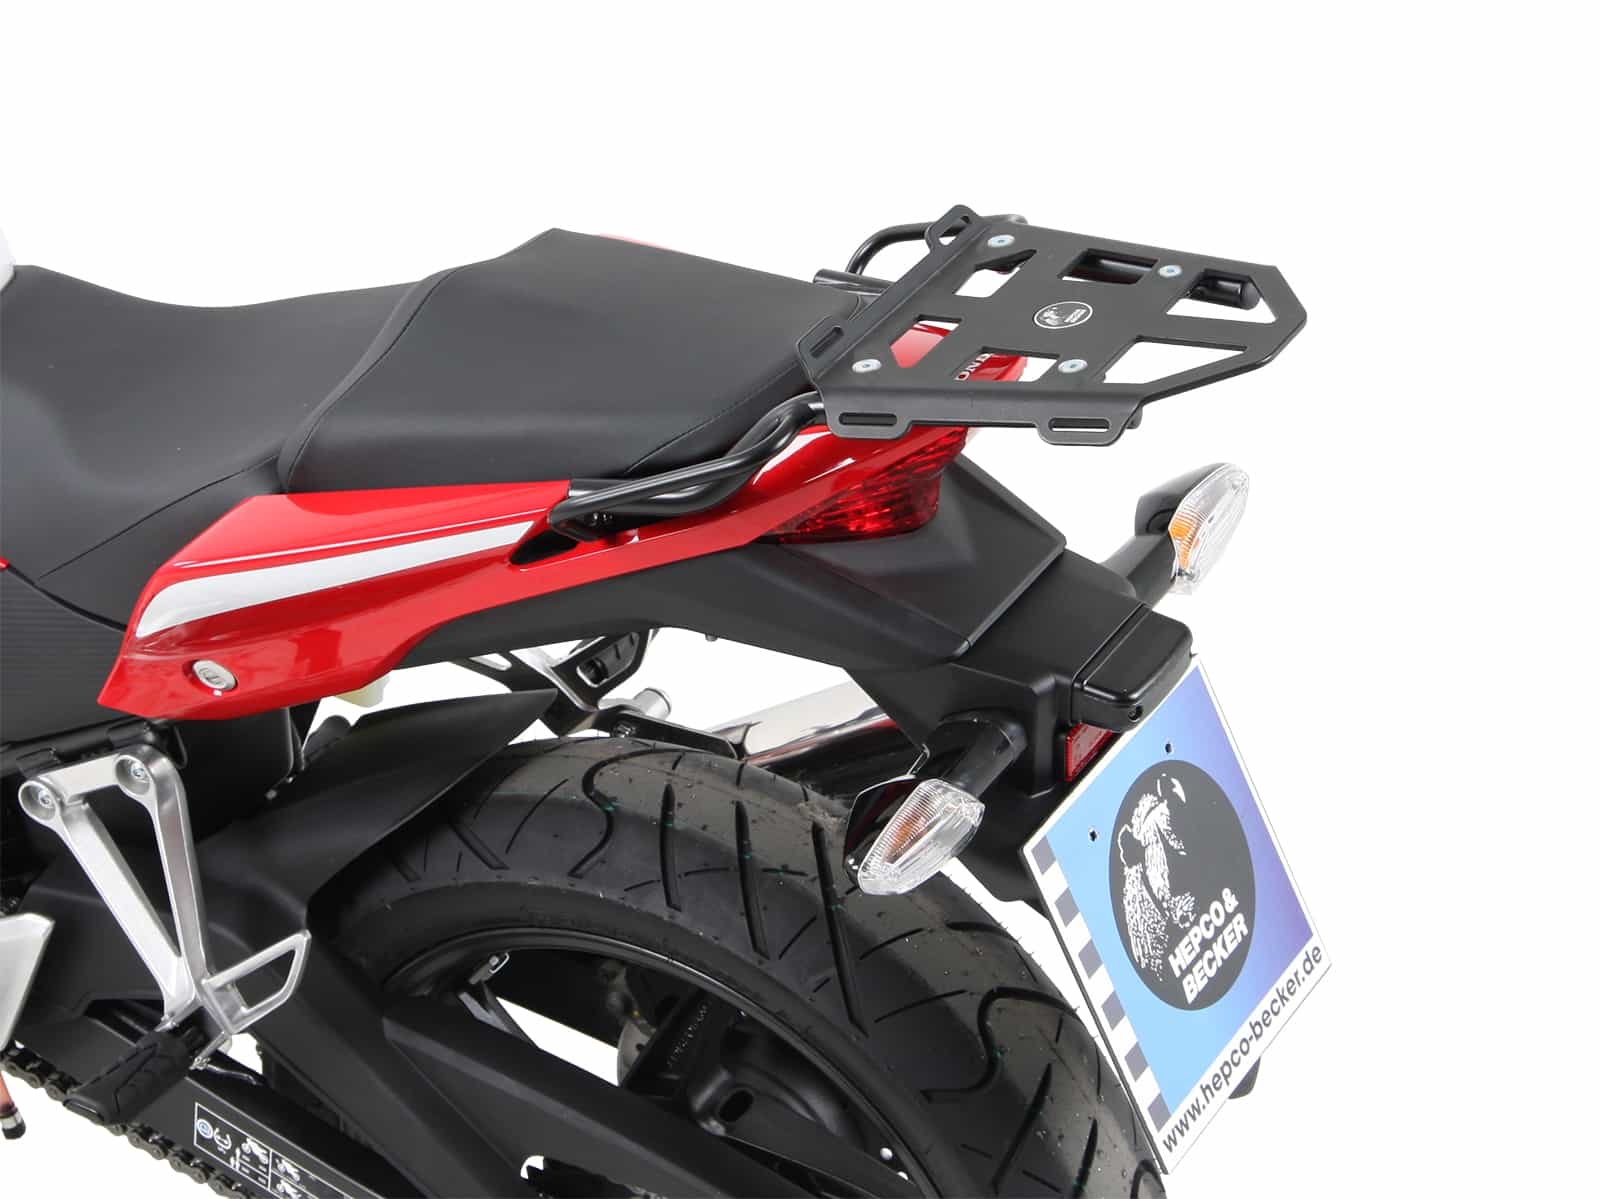 Minirack soft luggage rear rack for Honda CBR 125 R (2011-)